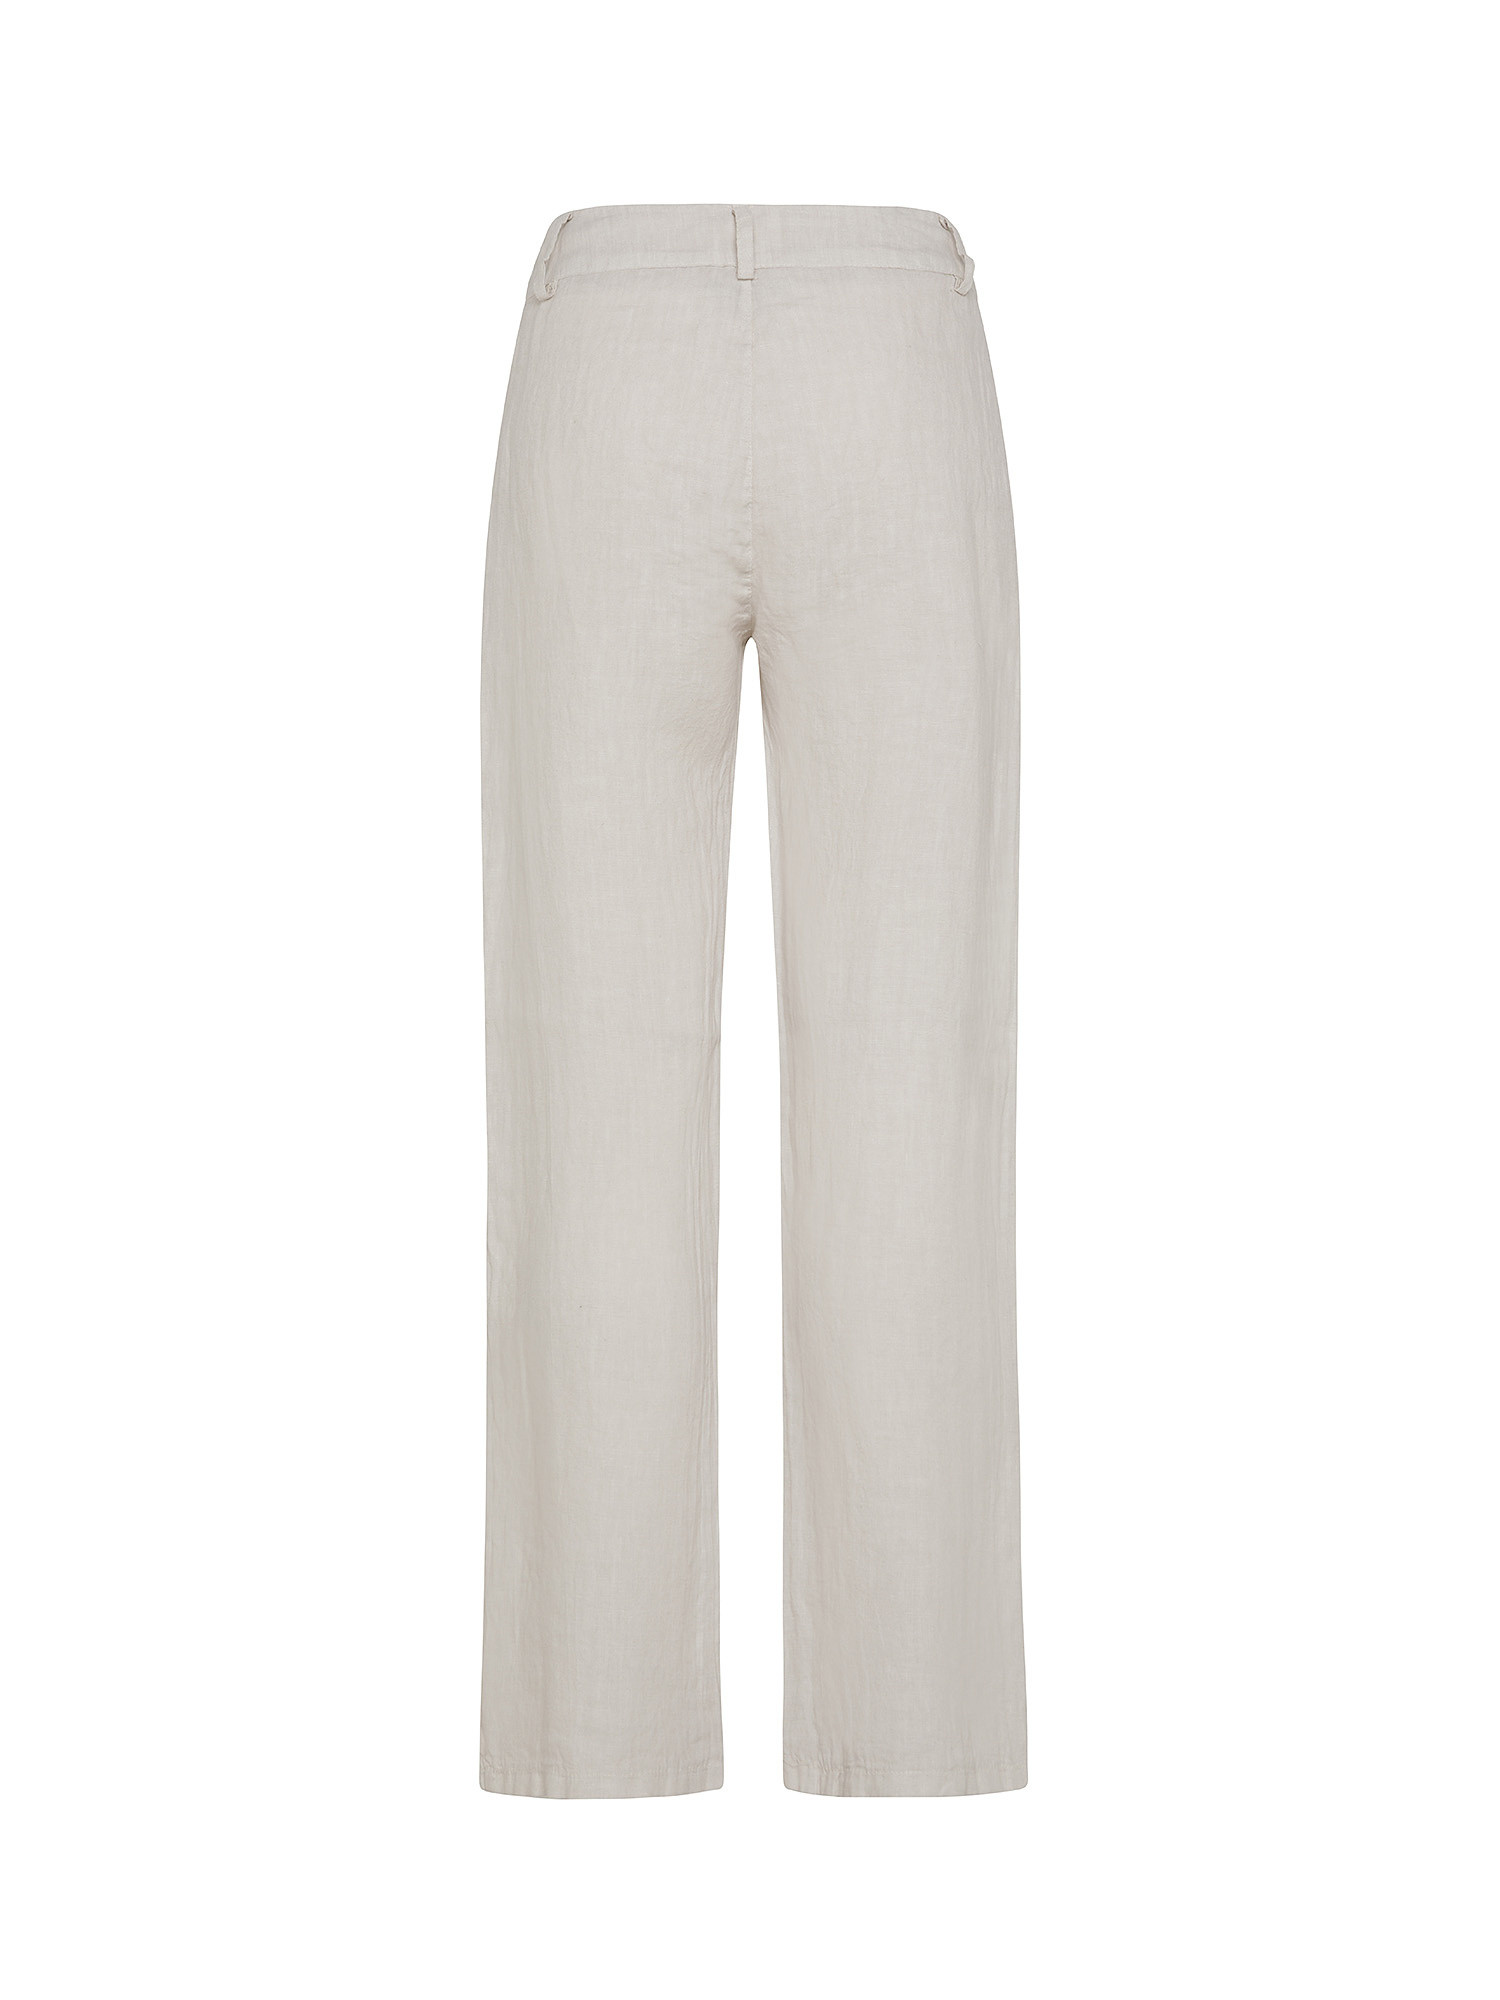 Koan - Pantaloni in lino con pinces, Beige, large image number 1